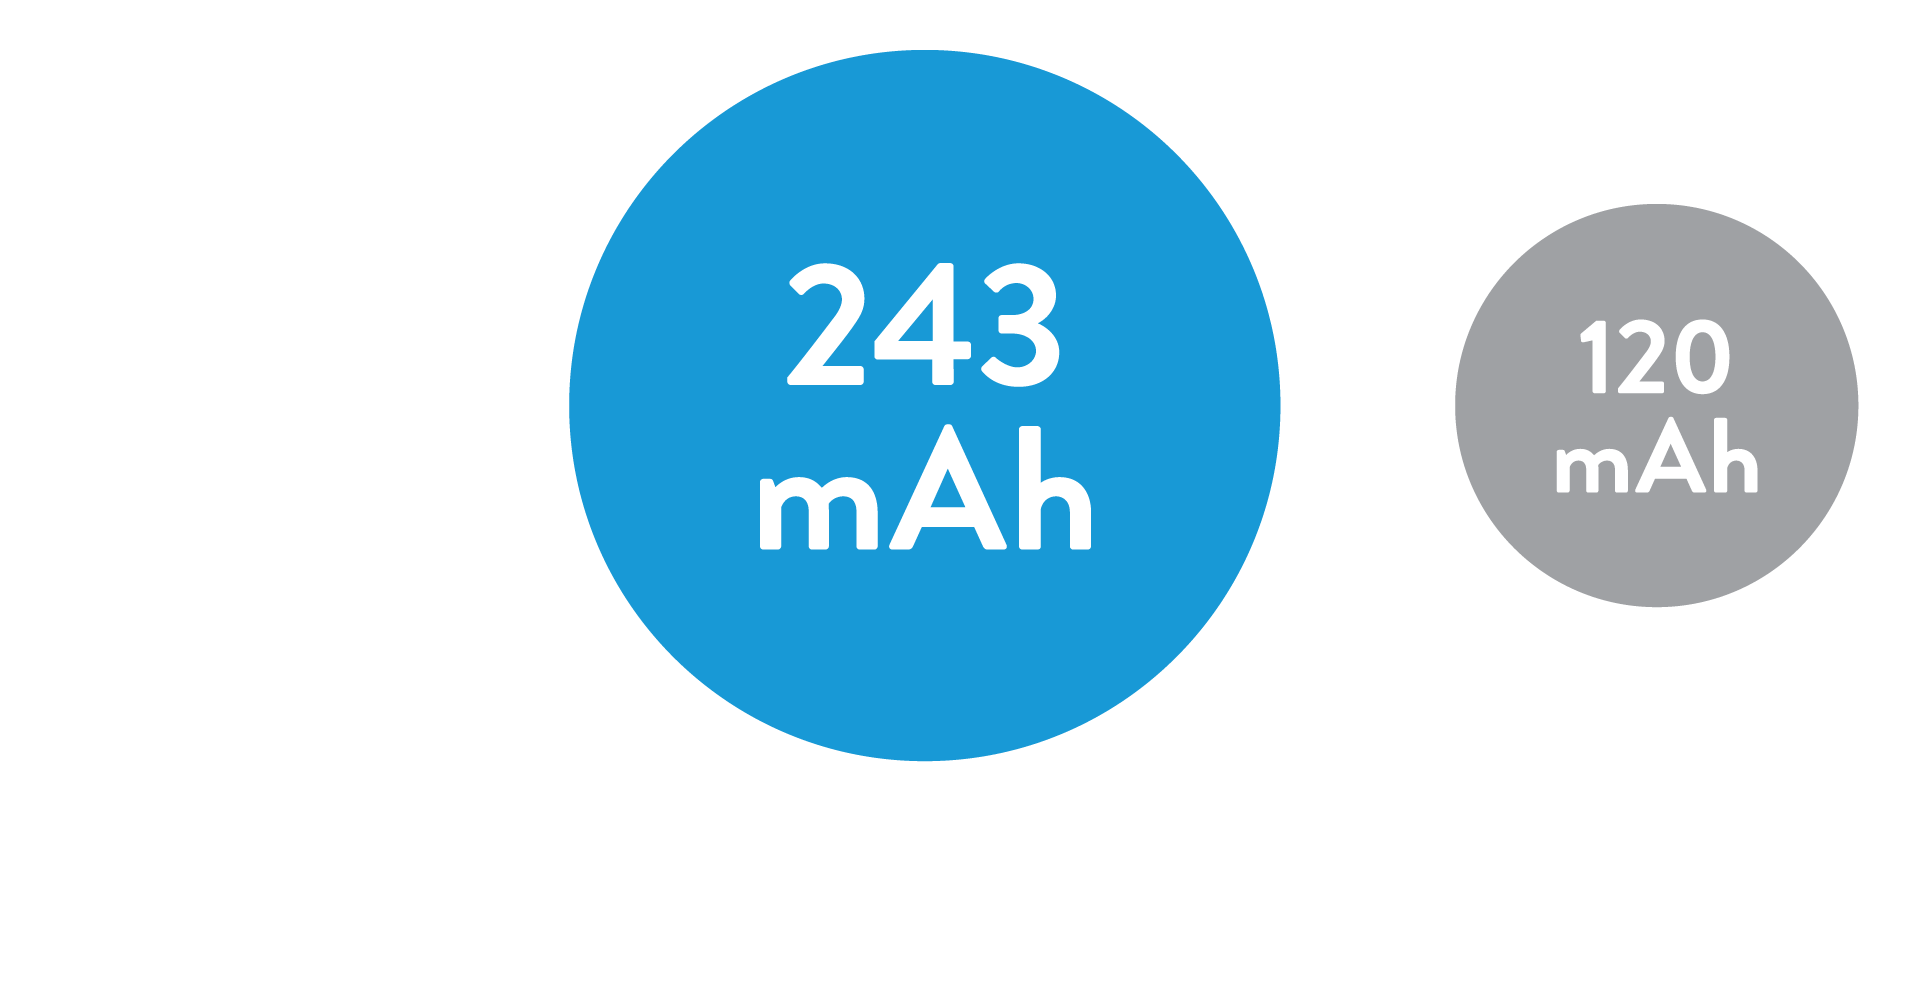 Aveir VR Leadless Pacemaker battery capacity 243 mAh Micra Leadless Pacemaker  120 mAh